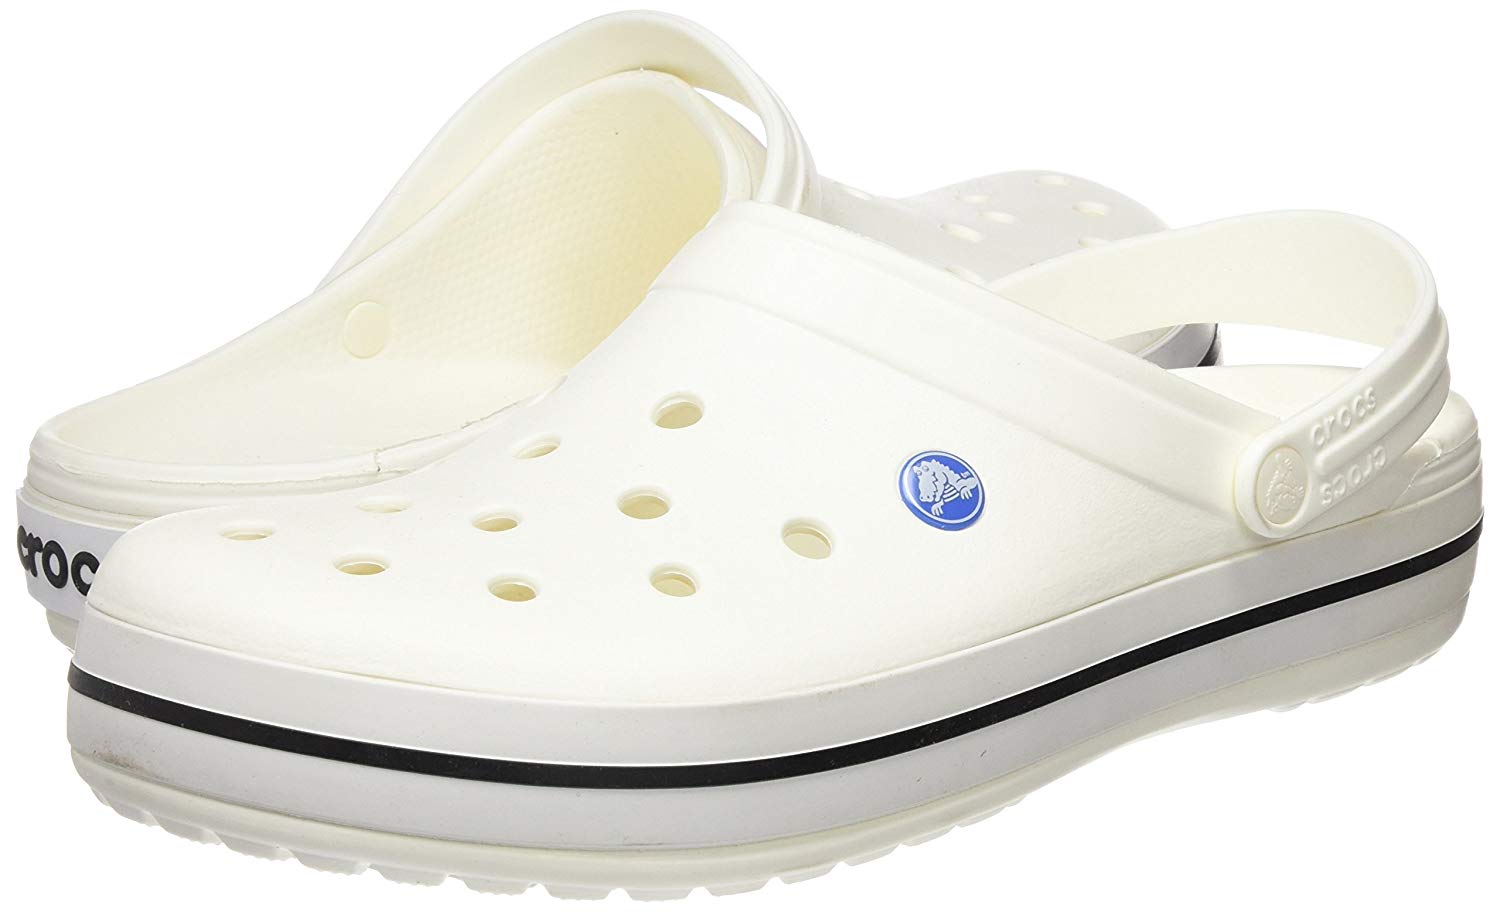 Crocs Womens Crocbrabd Low Top Slip On Walking Shoes, White, Size 9.0 kjNp | eBay